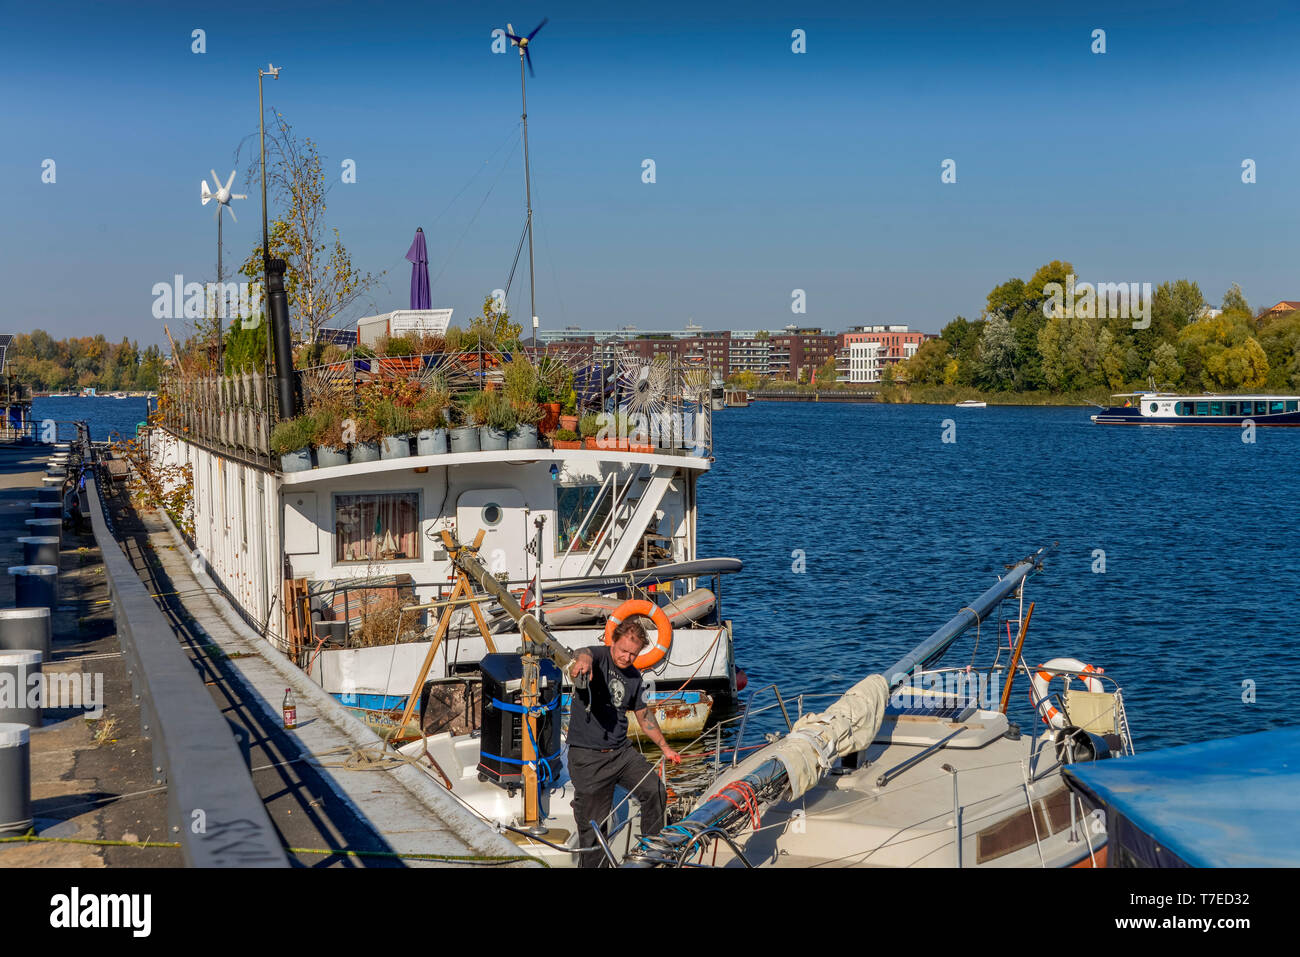 Schiffsanleger, Hausboot, Rummelsburger Bucht, Stralau, Friedrichshain, Berlin, Deutschland Banque D'Images